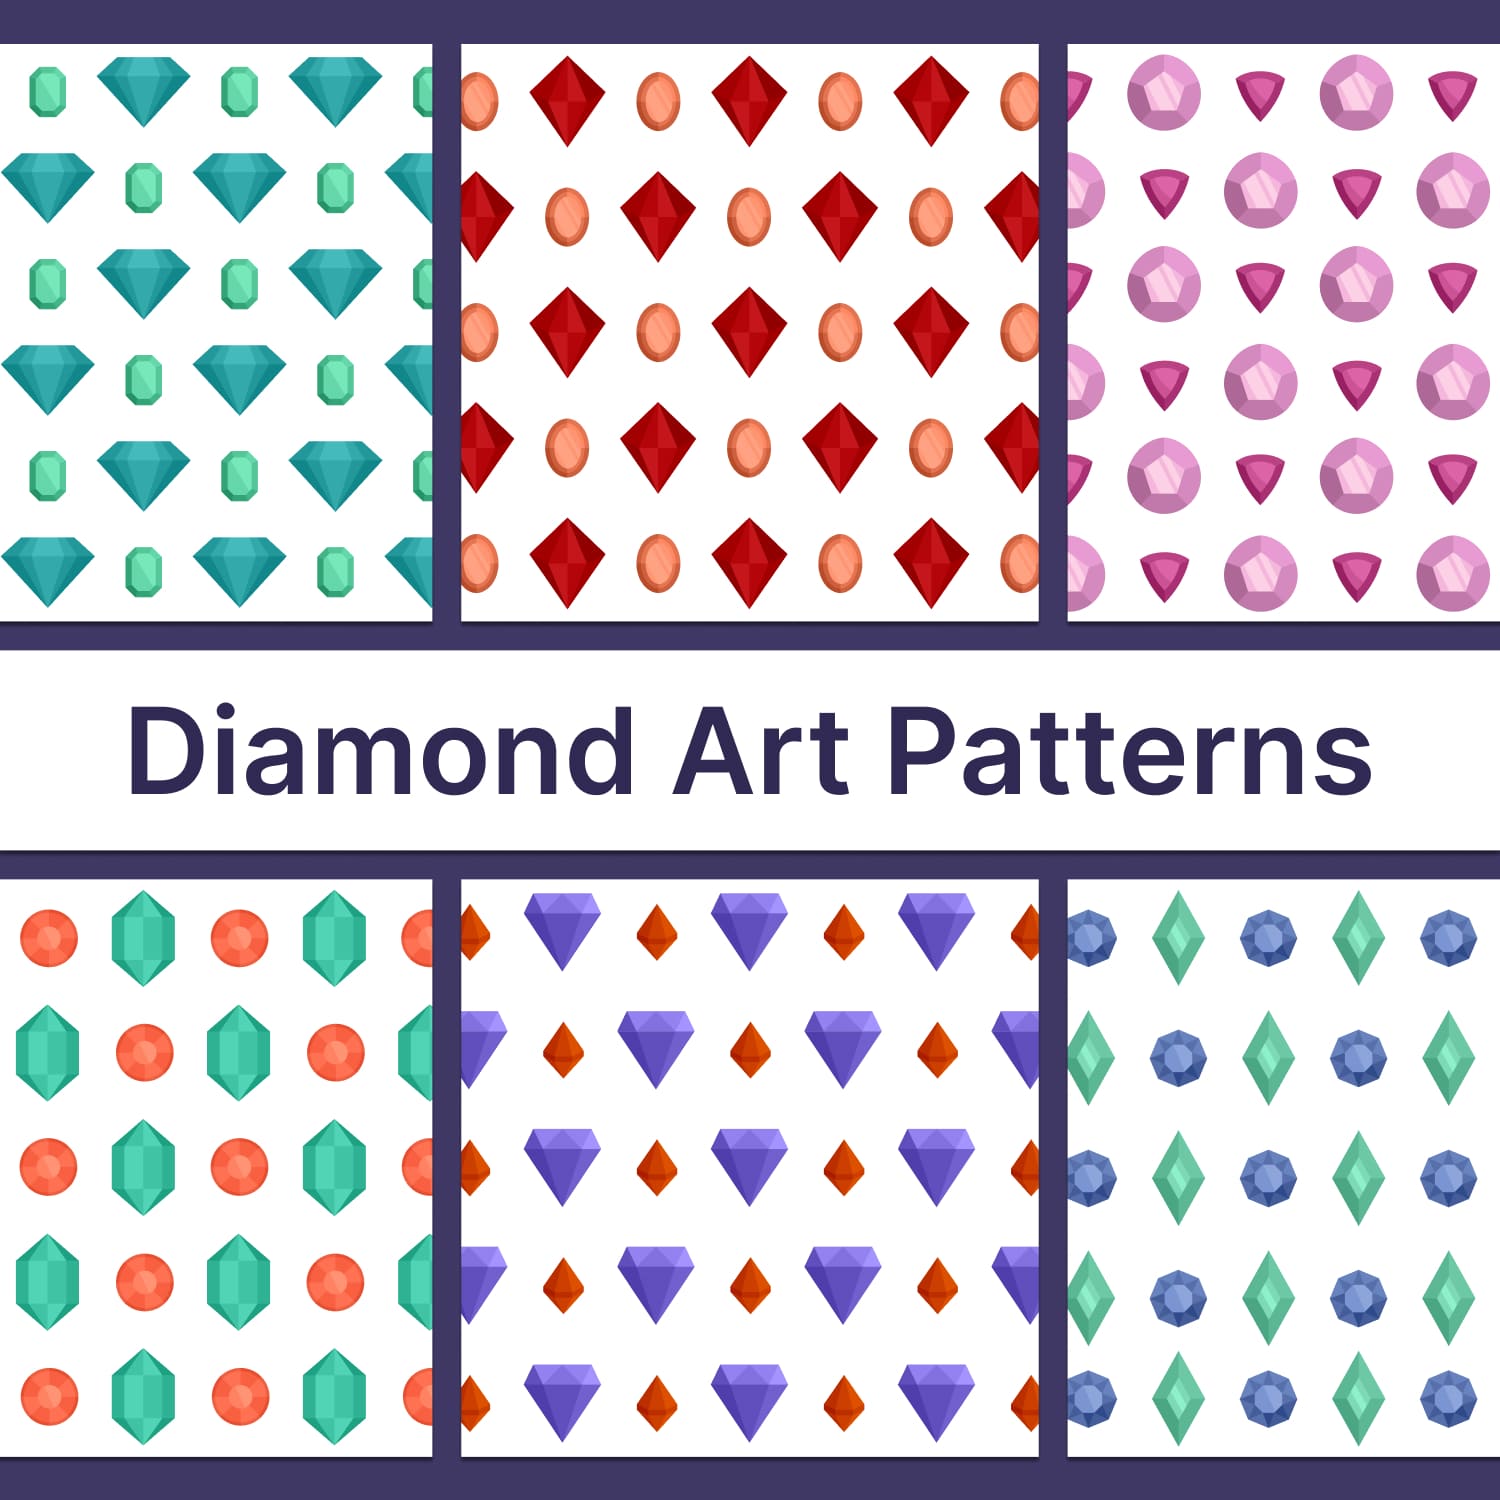 diamond art patterns.